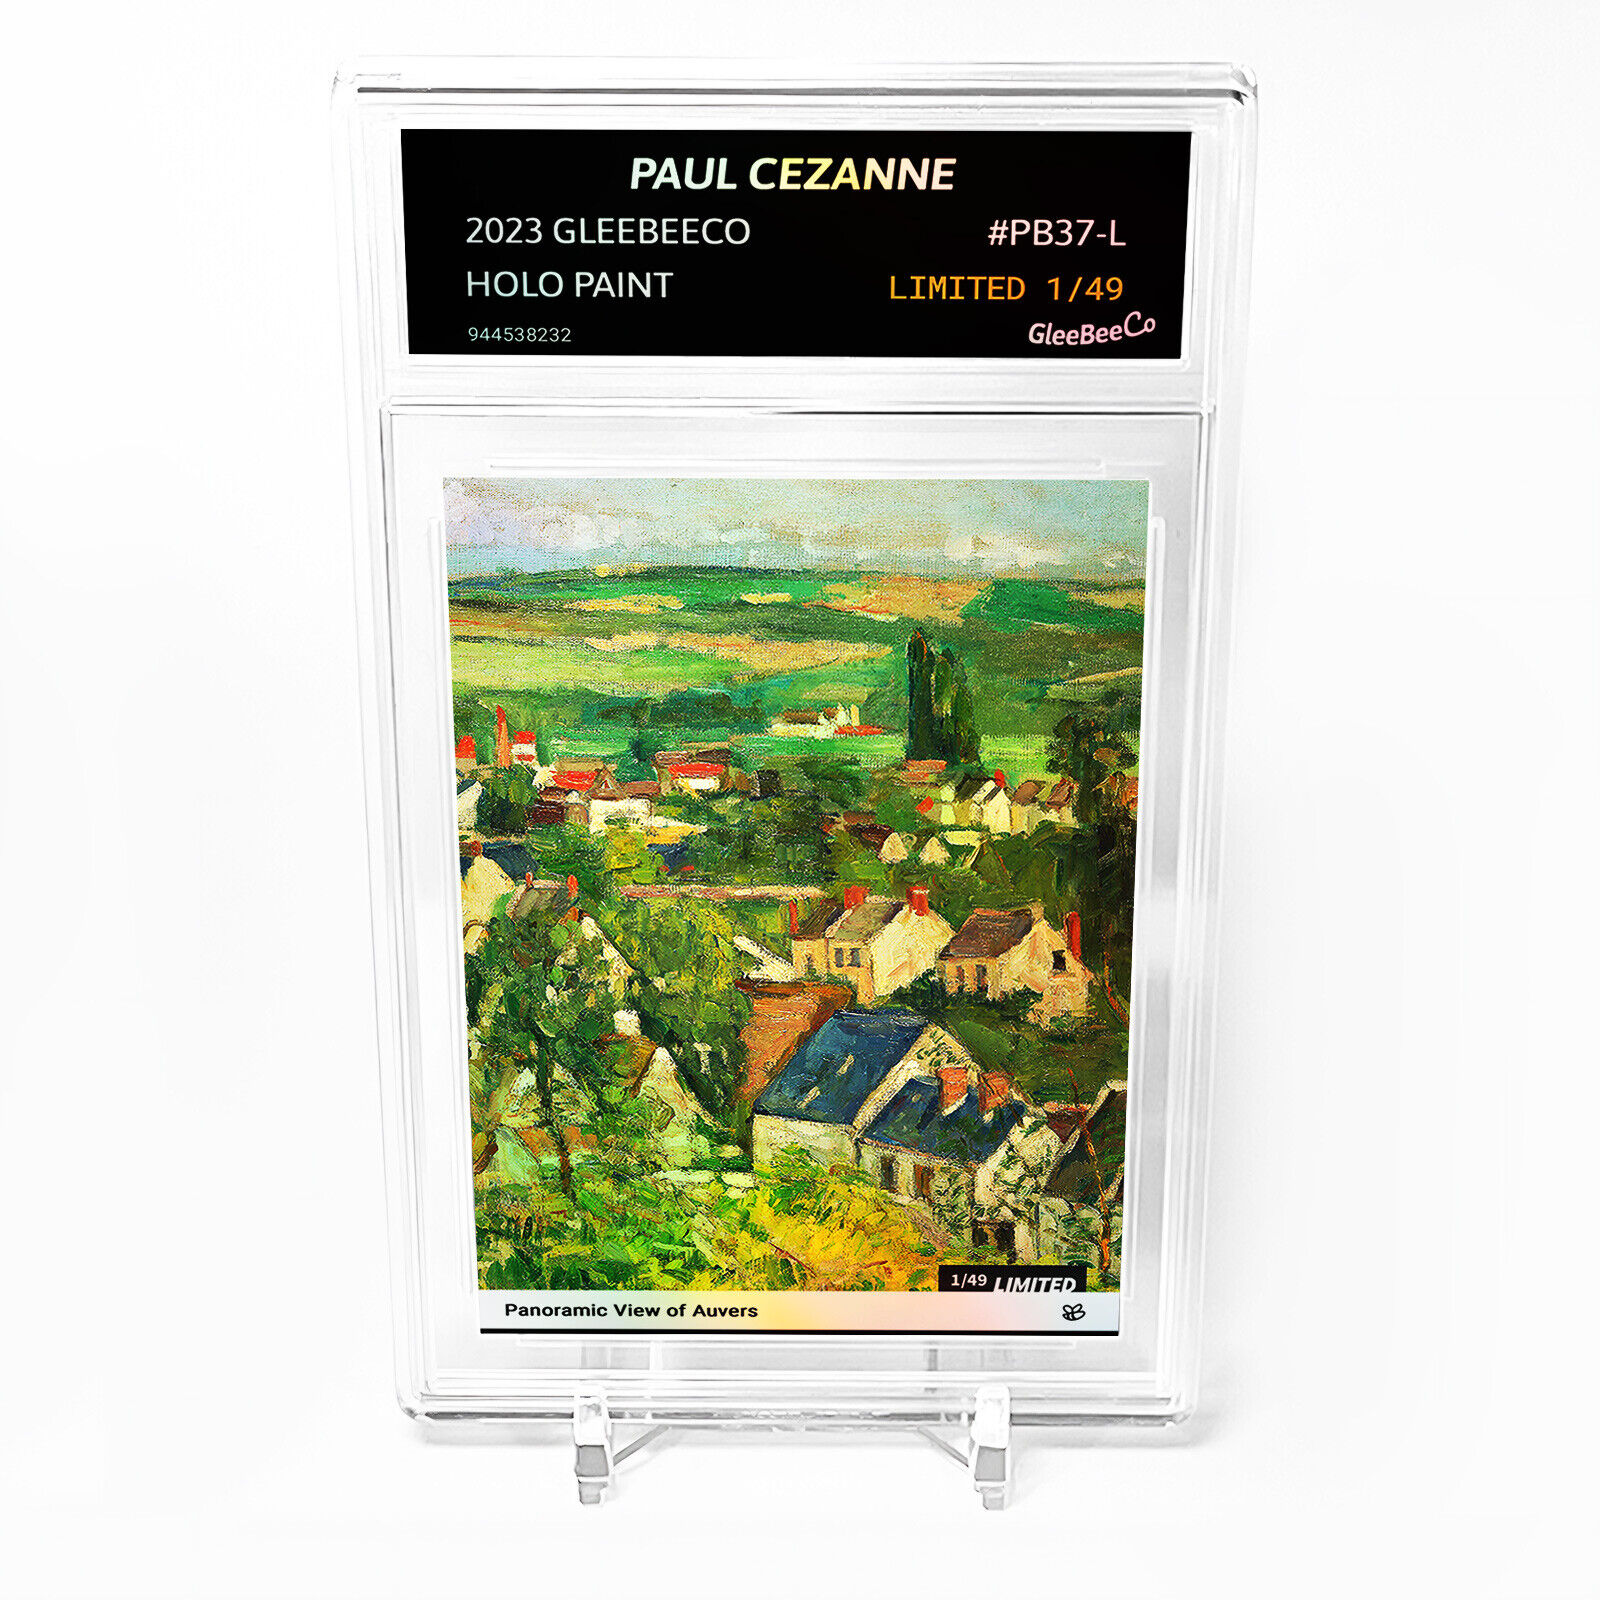 PANORAMIC VIEW OF AUVERS Paul Cezanne 2023 GleeBeeCo Holo Card #PB37-L /49